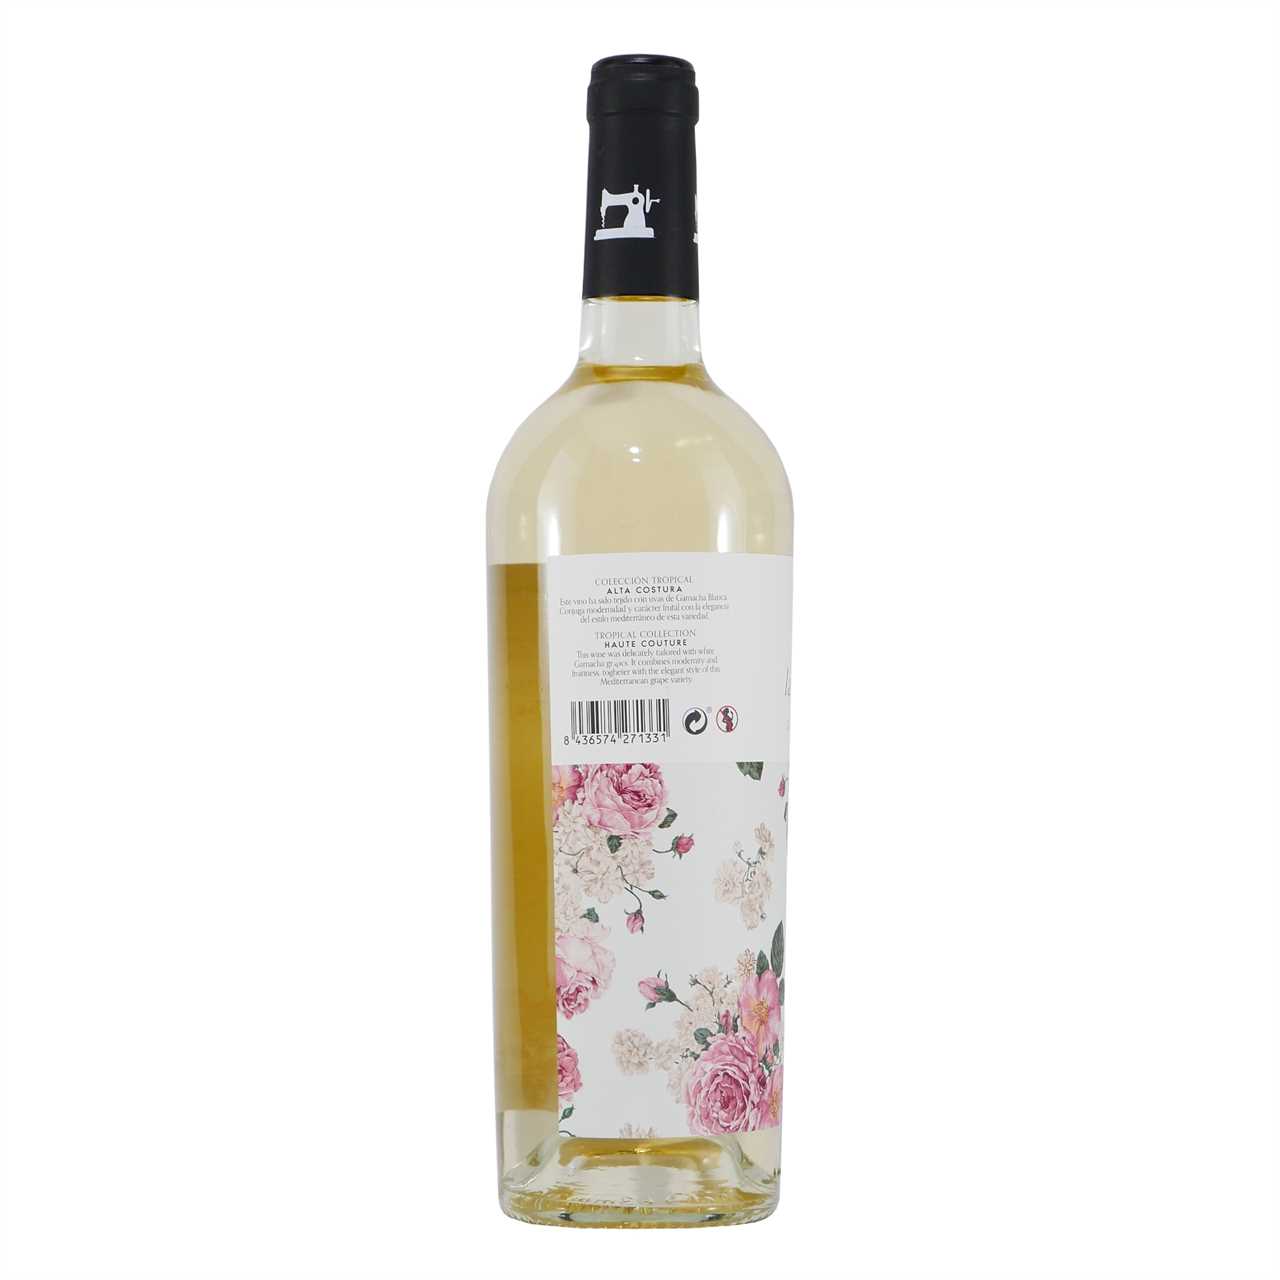 La Sastreria Blanca -trocken- Weißwein (6 x 0,75L)